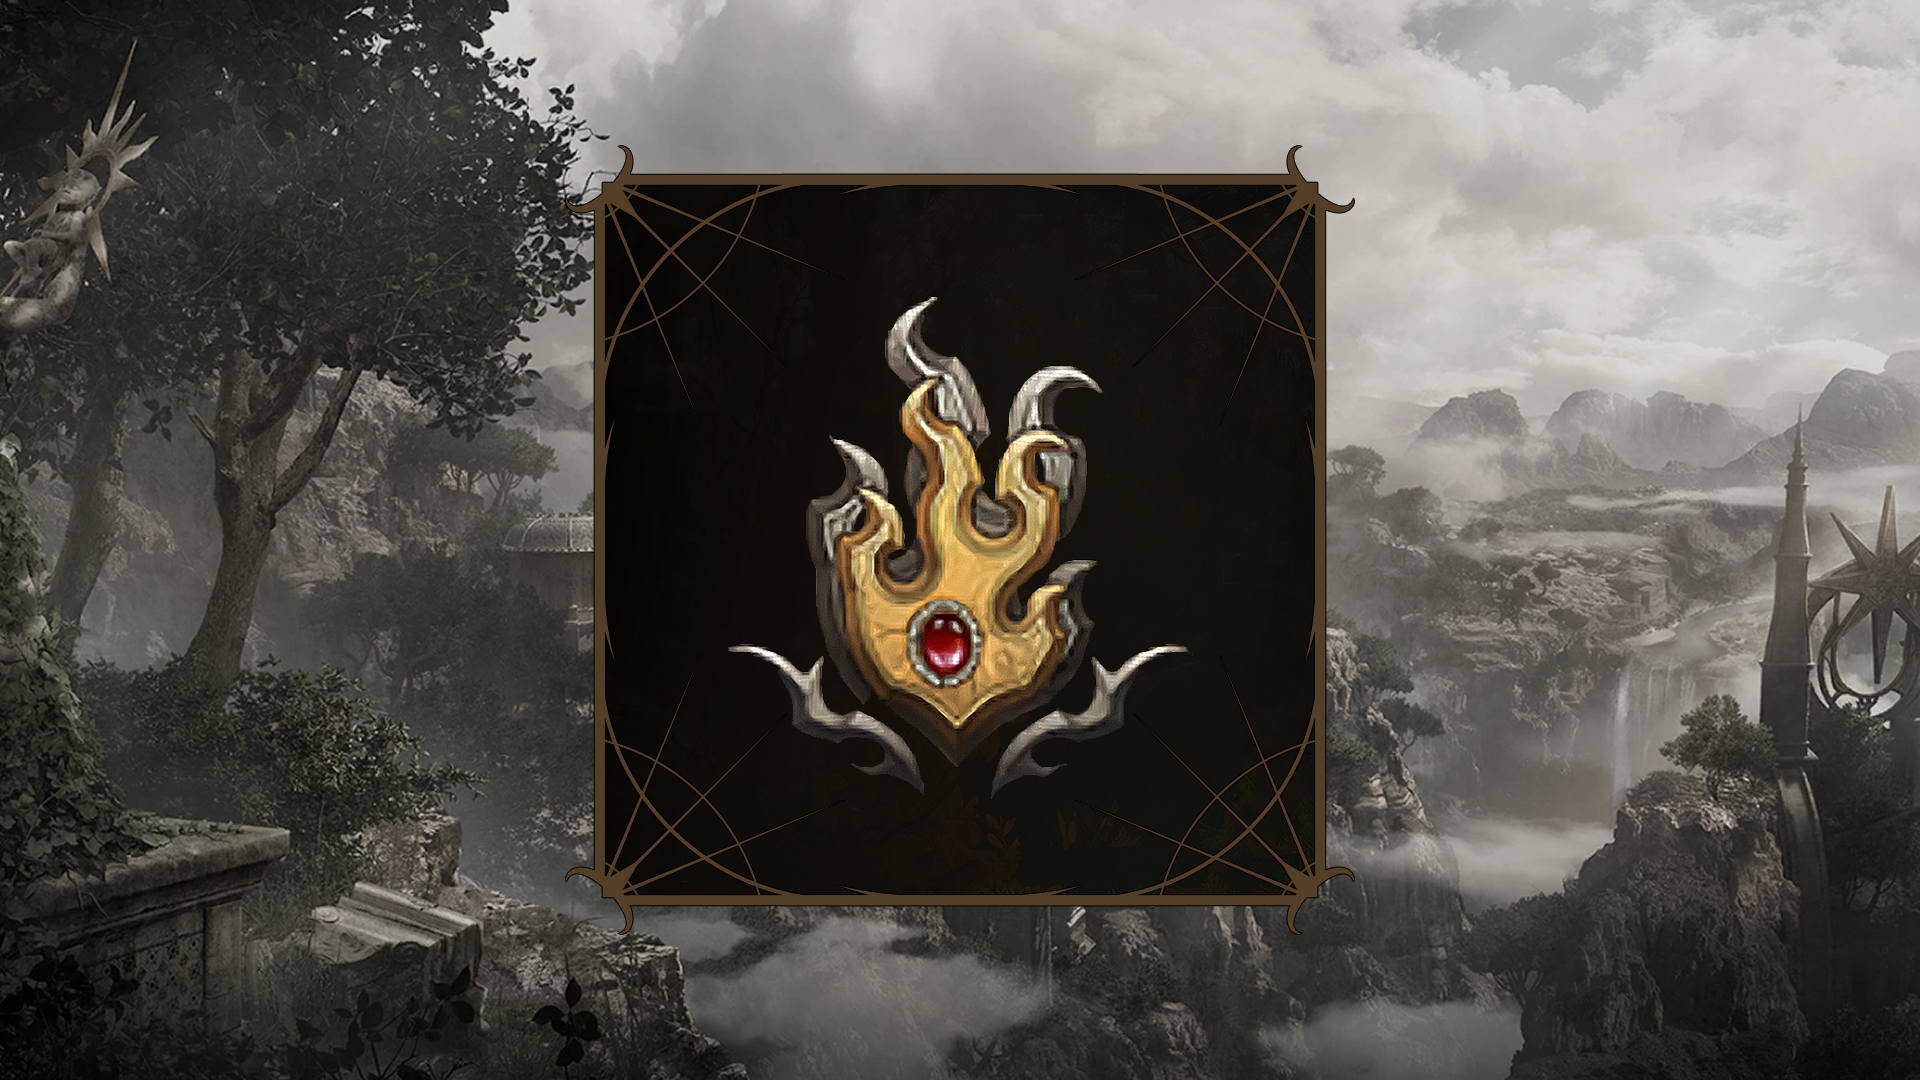 Sorcerer class emblem from Baldur’s Gate 3 over a grey tone backdrop.